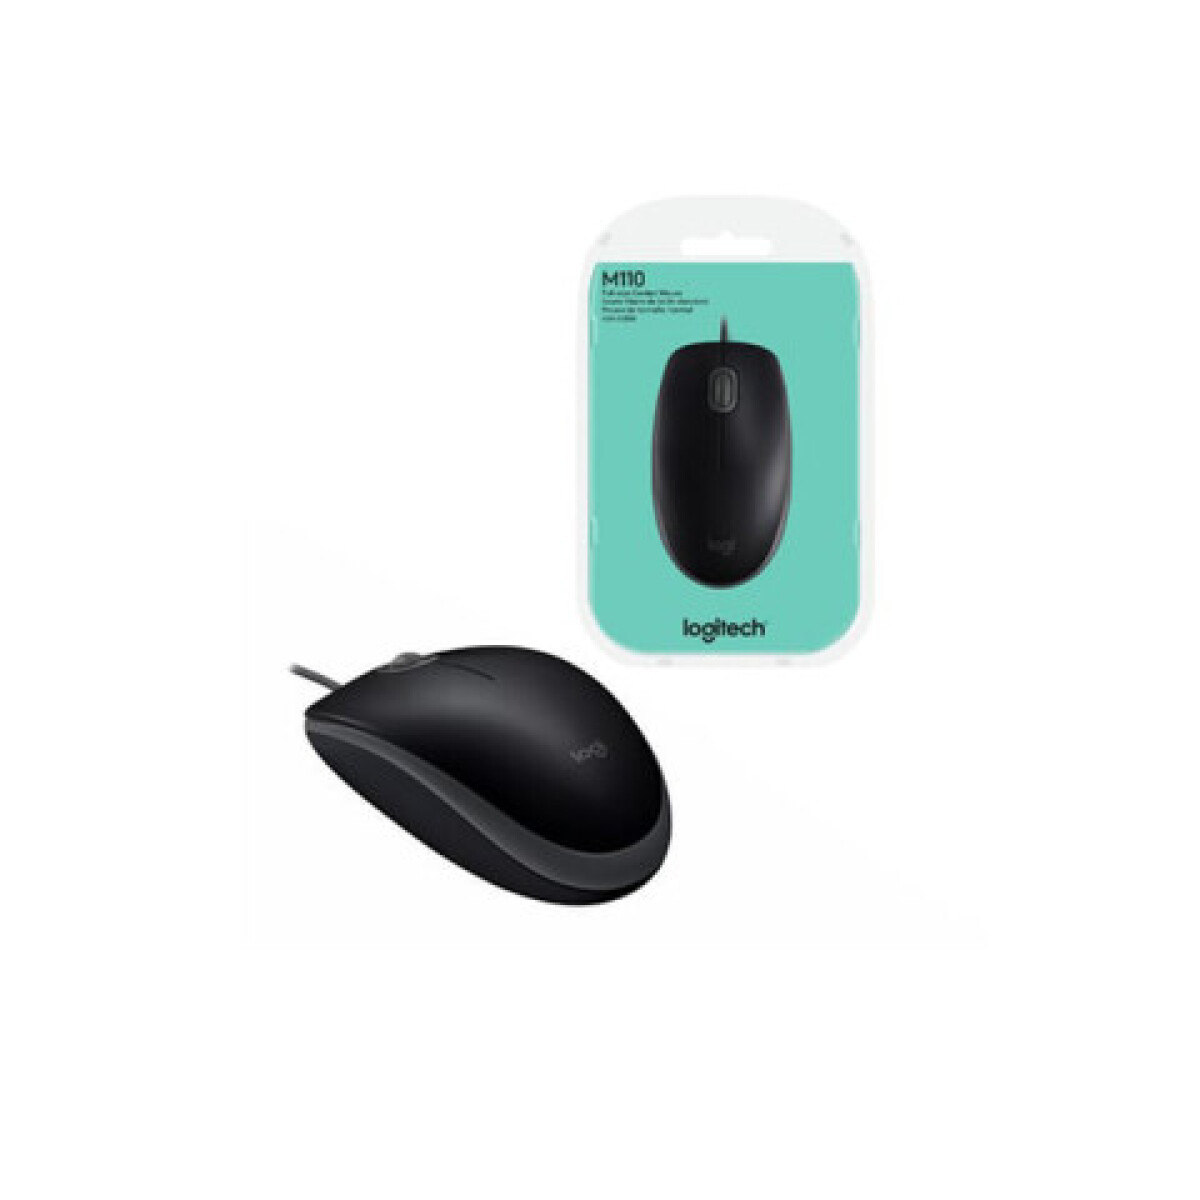 Mouse Optico USB Logitech M110 silencioso Negro - Unica 